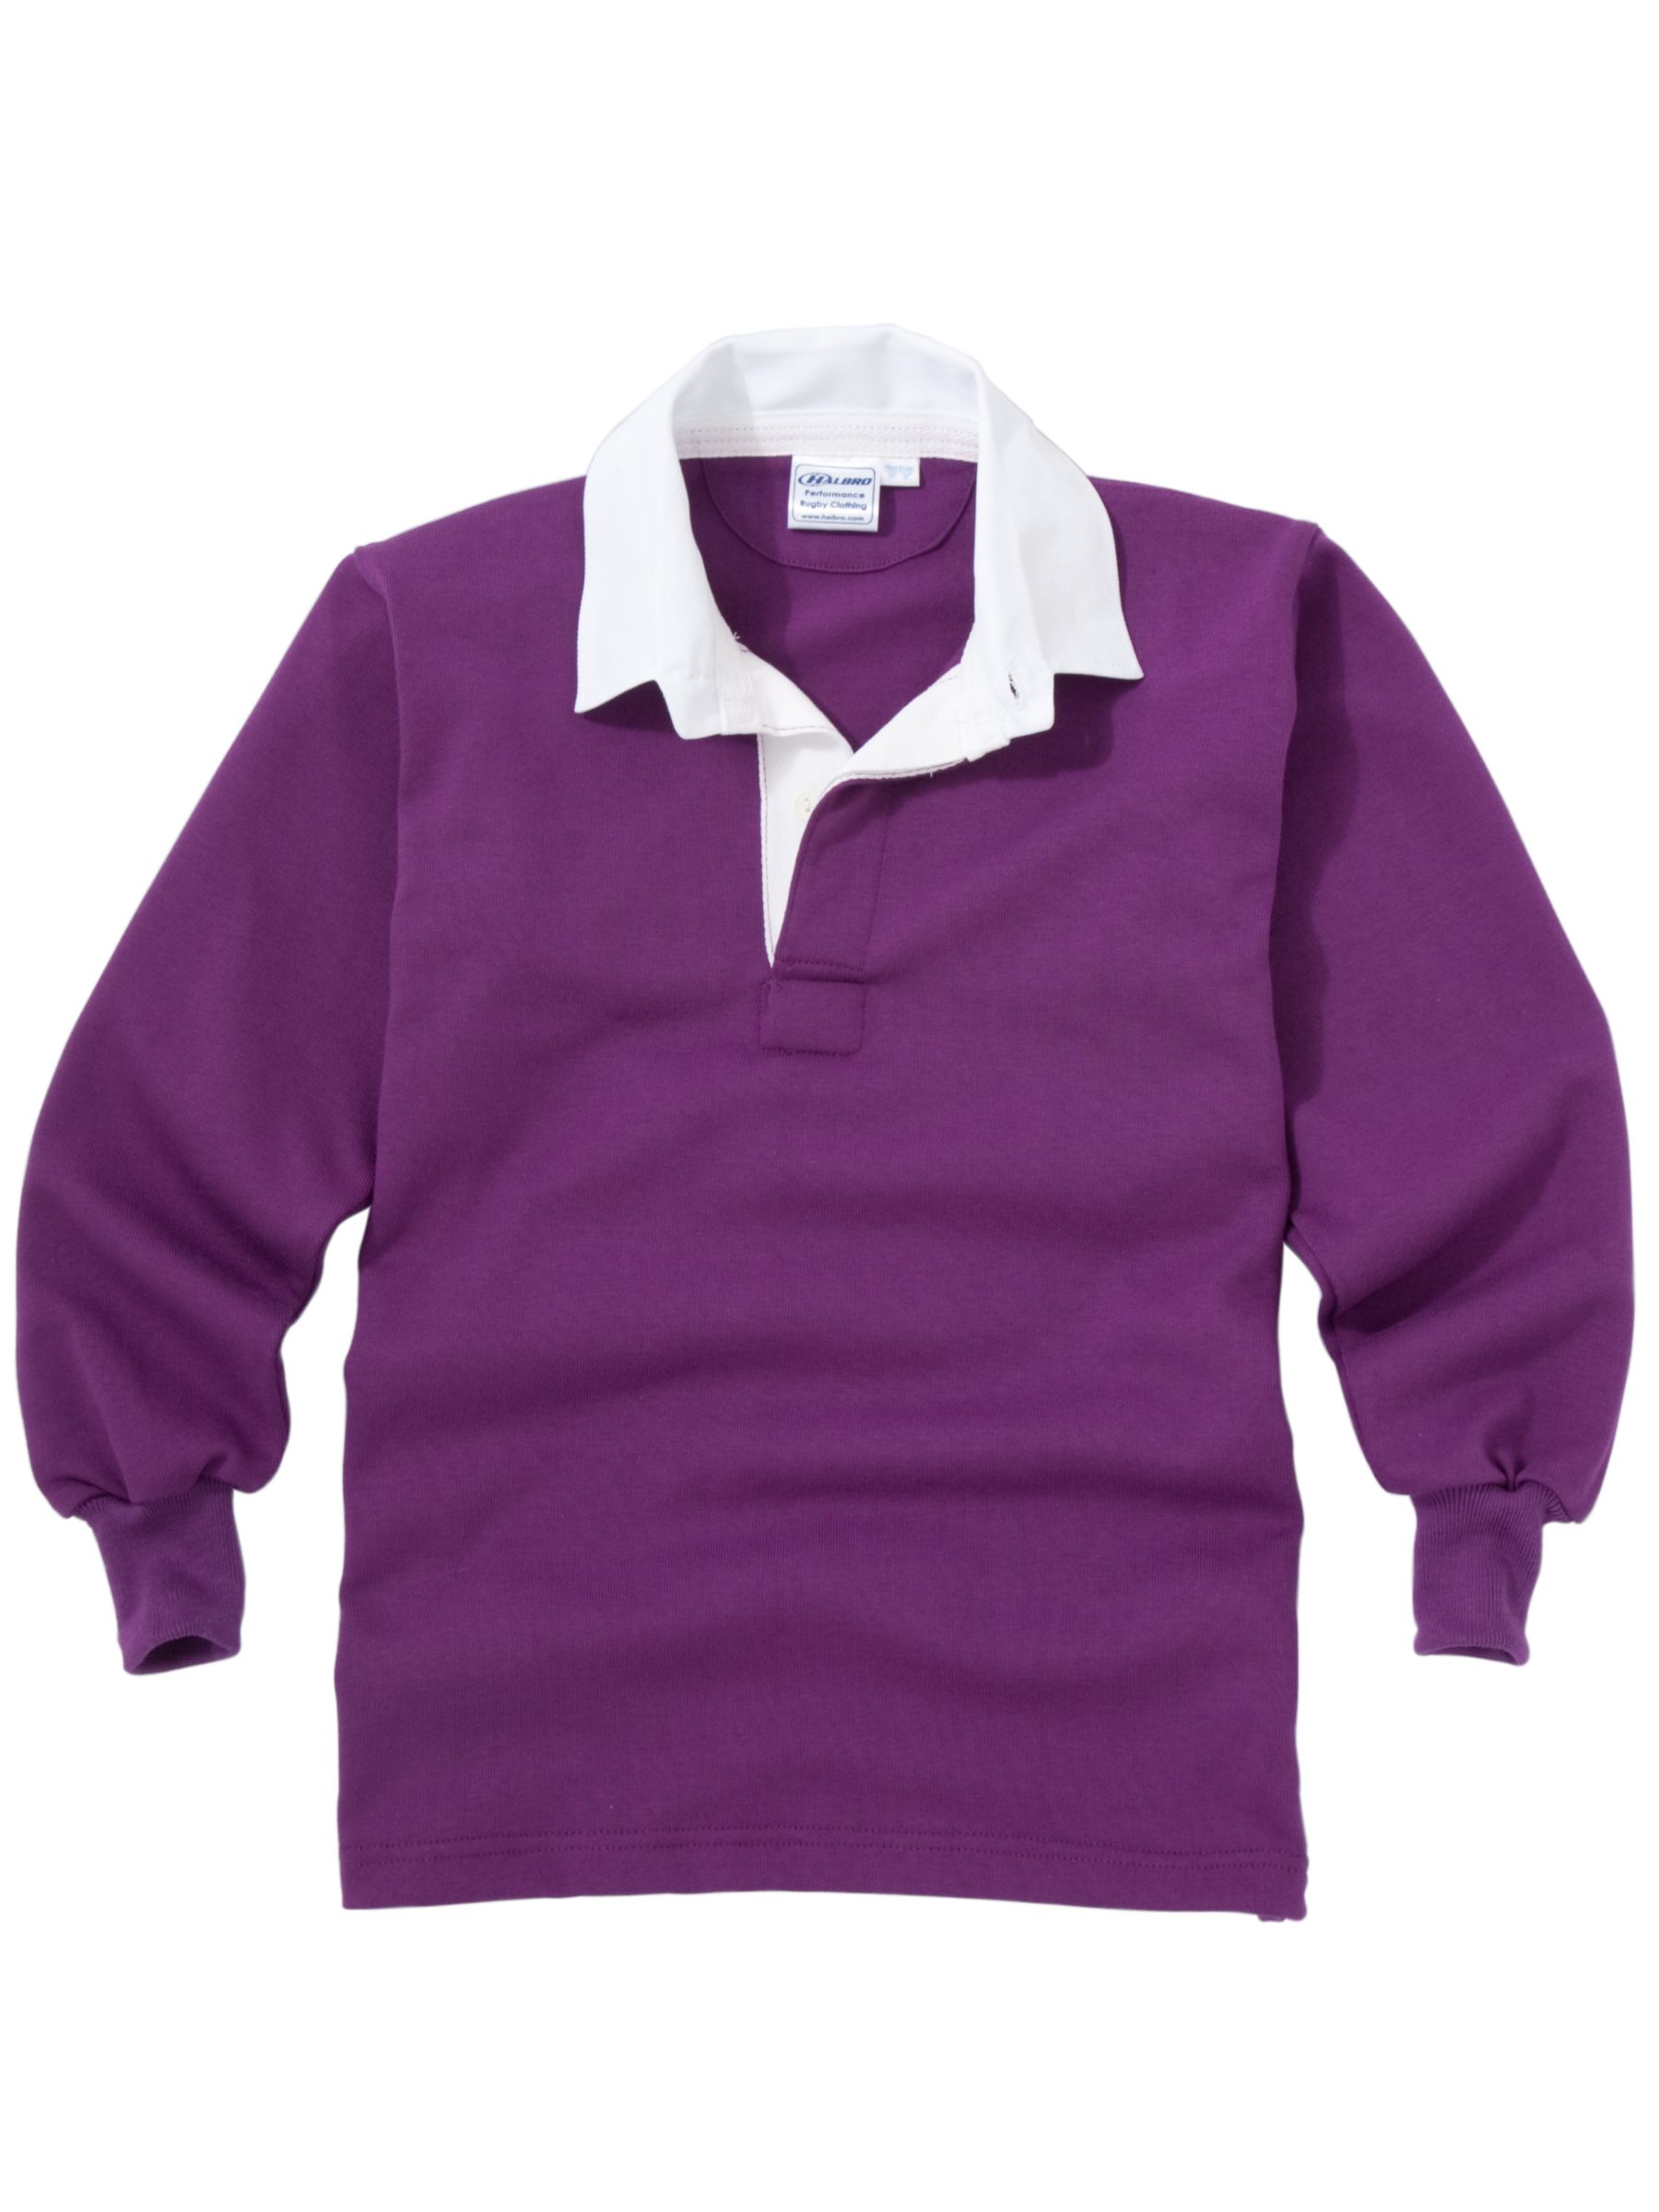 School Cotton Rugby Shirt, Purple